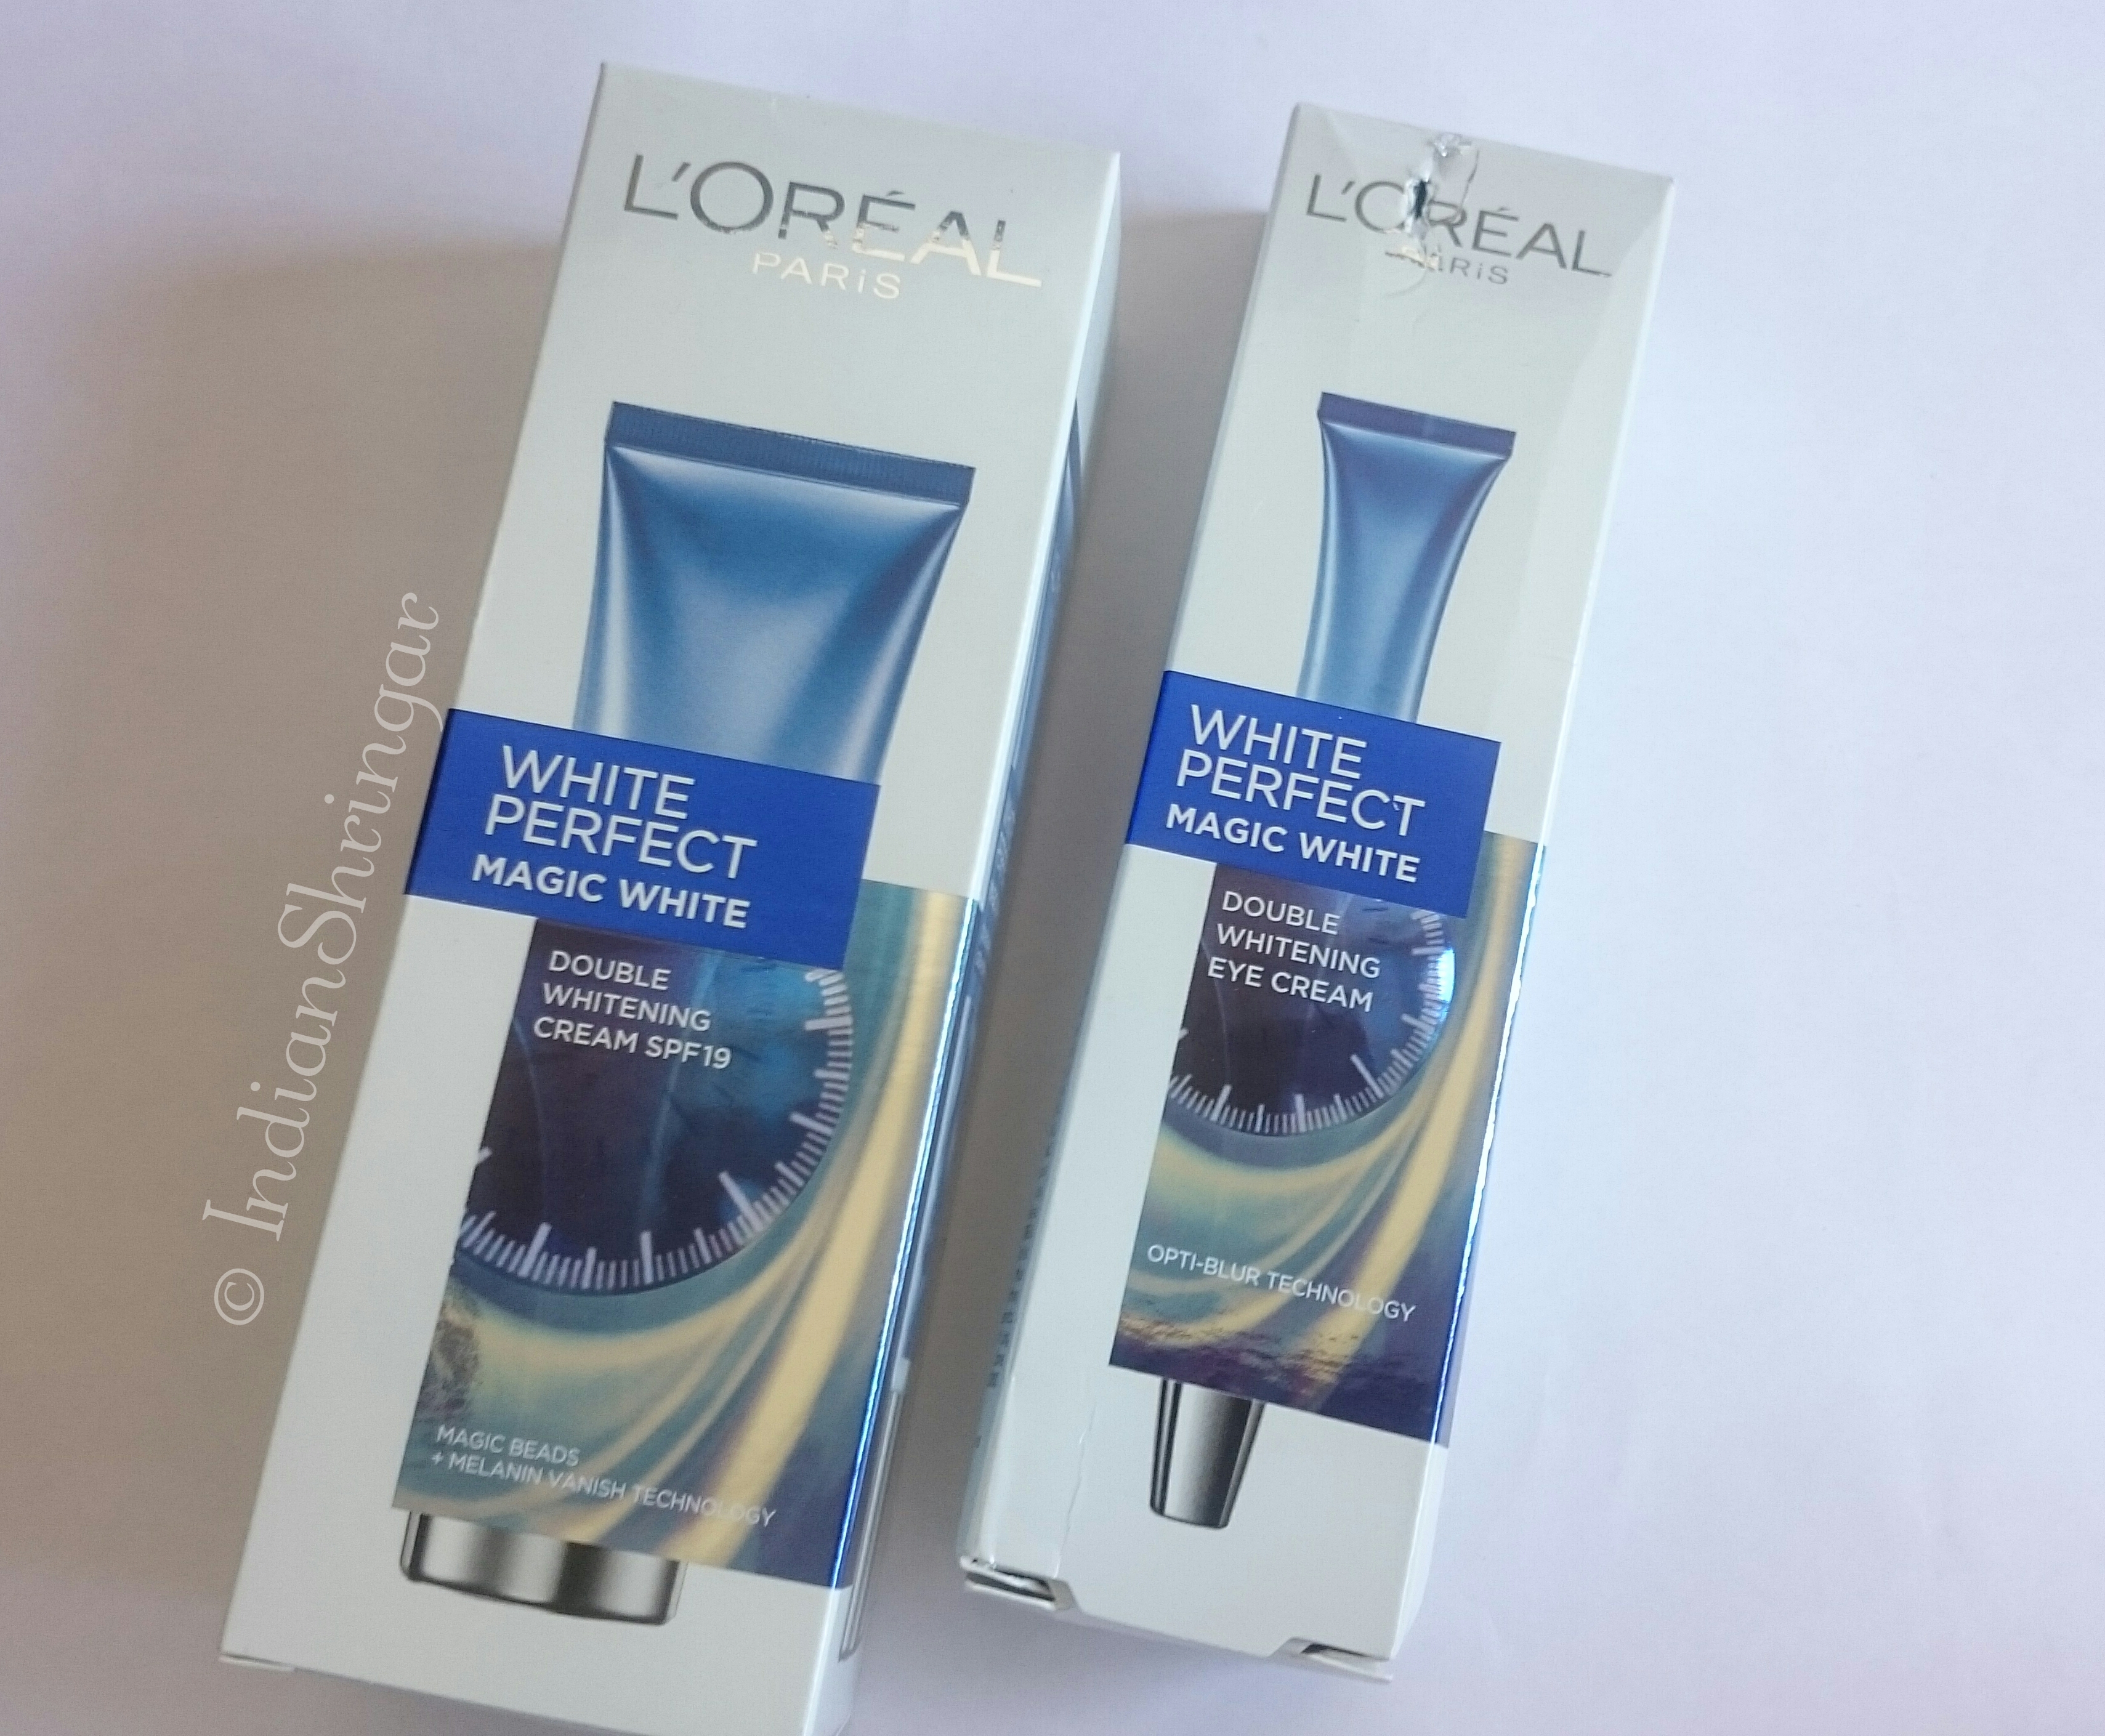 L'Oreal White Perfect Magic White Double Whitening Cream SPF 19 and Eye cream review